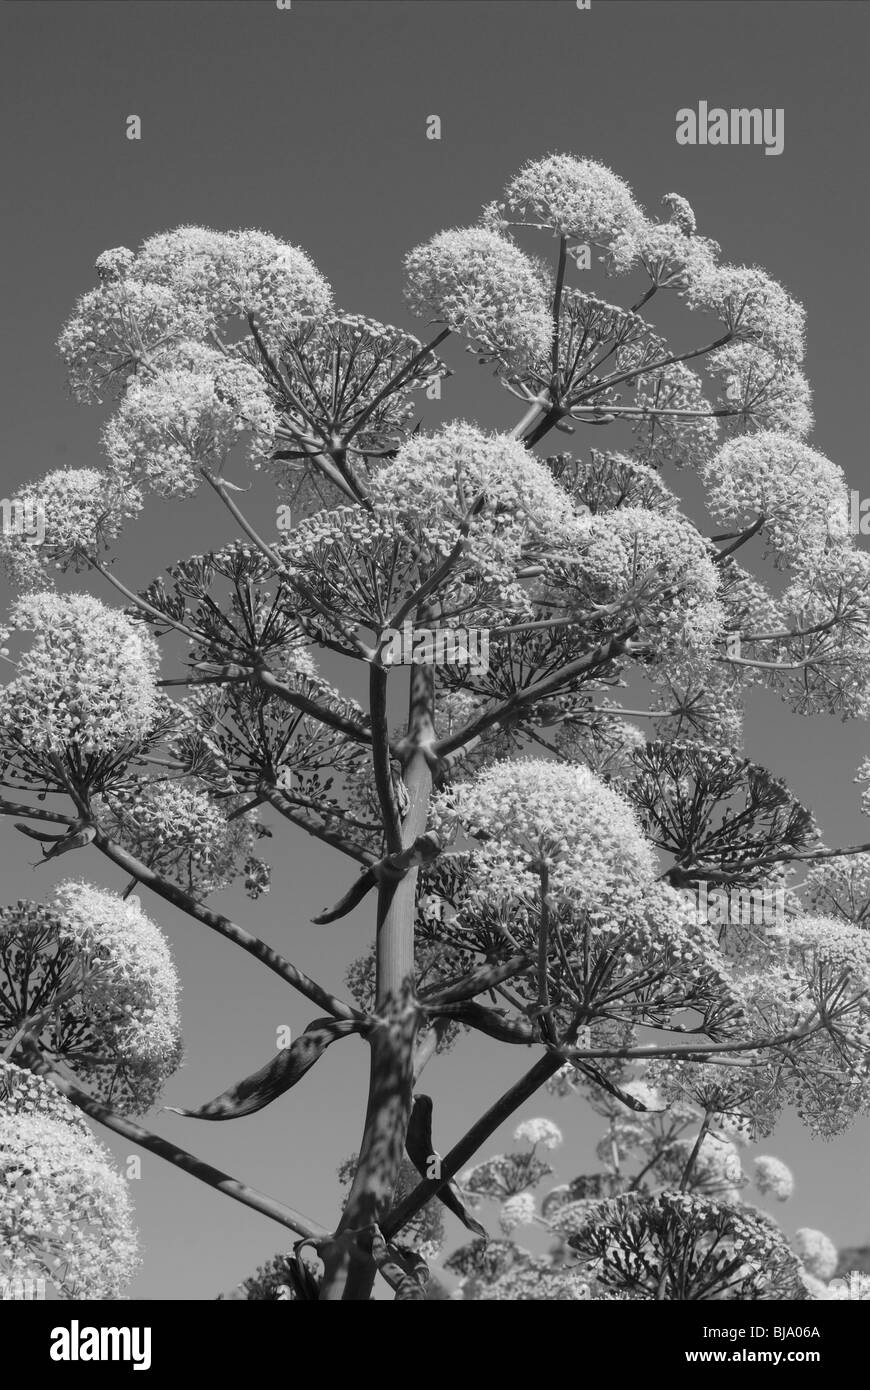 beautiful black and white flower photographs Stock Photo